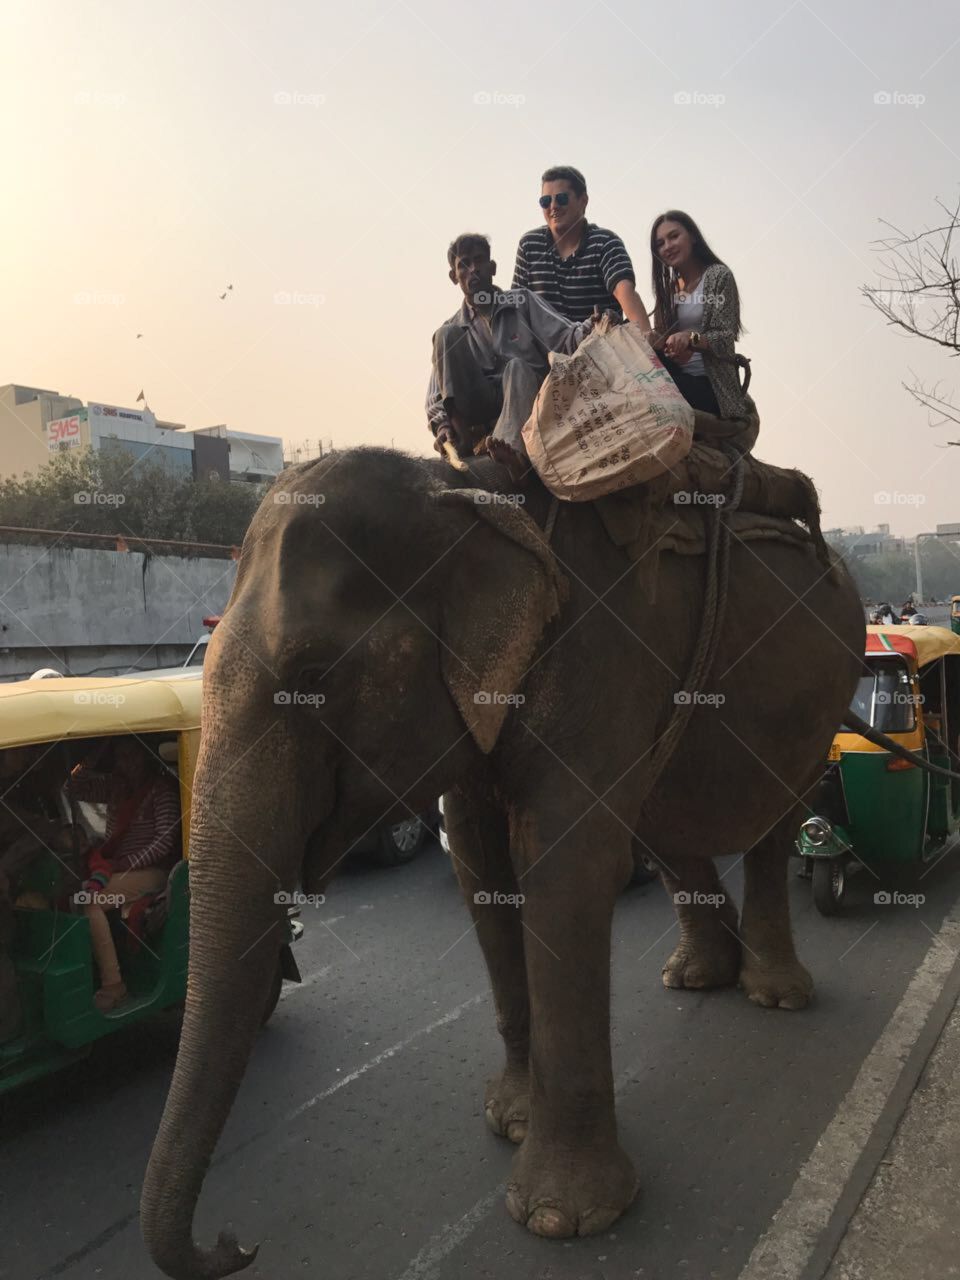 Elephant taxi in new delhi india